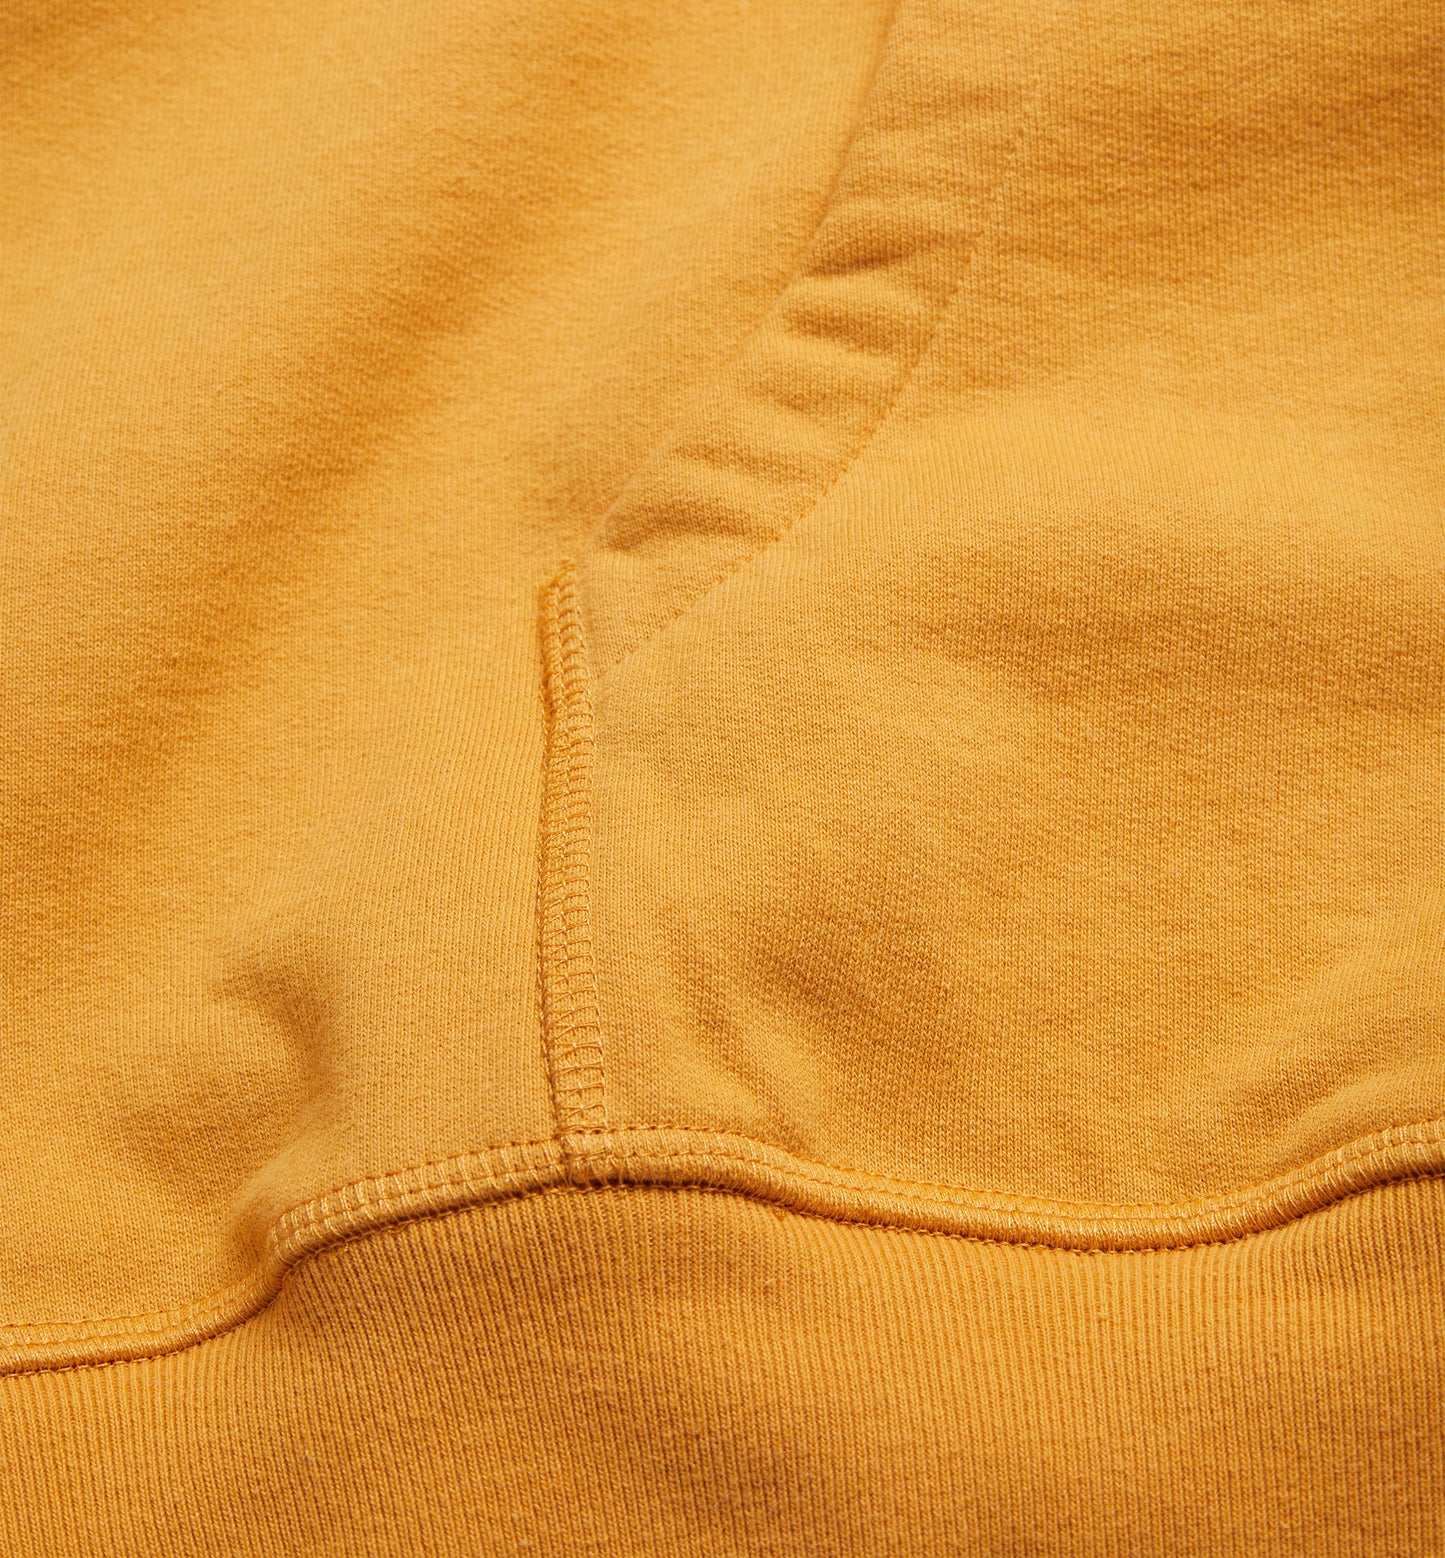 anxious dog hooded sweatshirt (gold yellow)